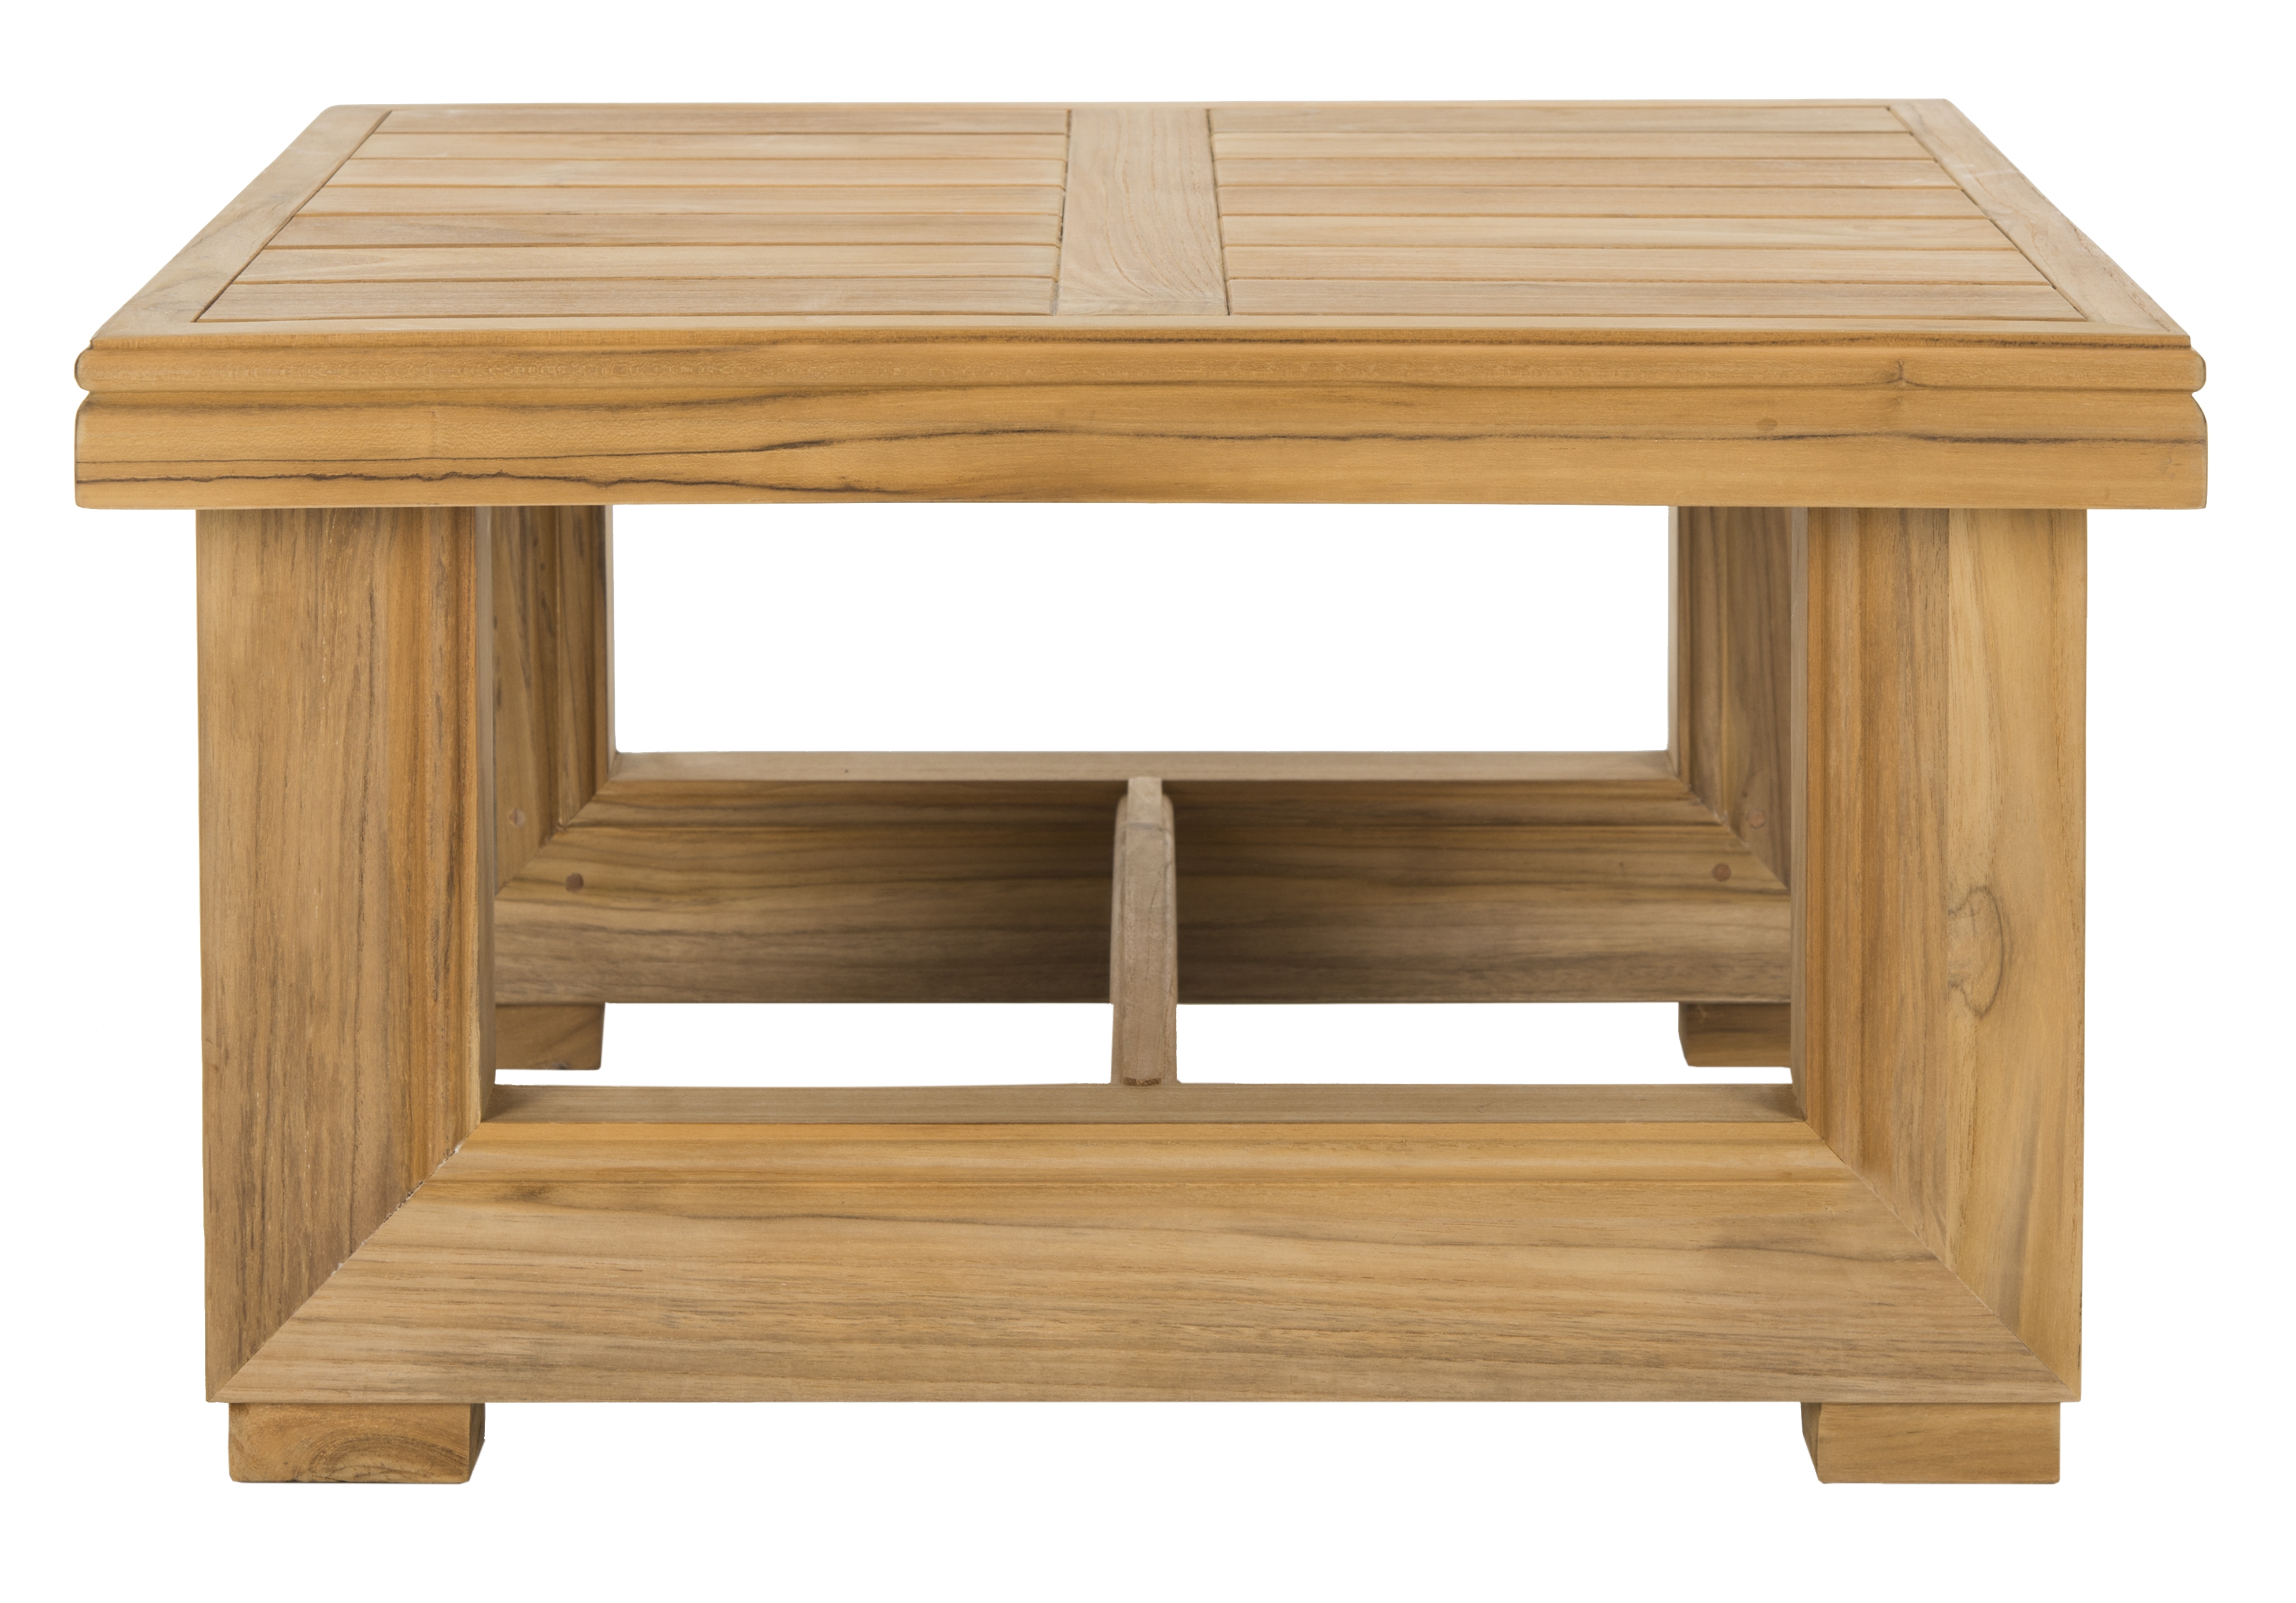 Montford End Table - Teak/Beige - Arlo Home - Image 1